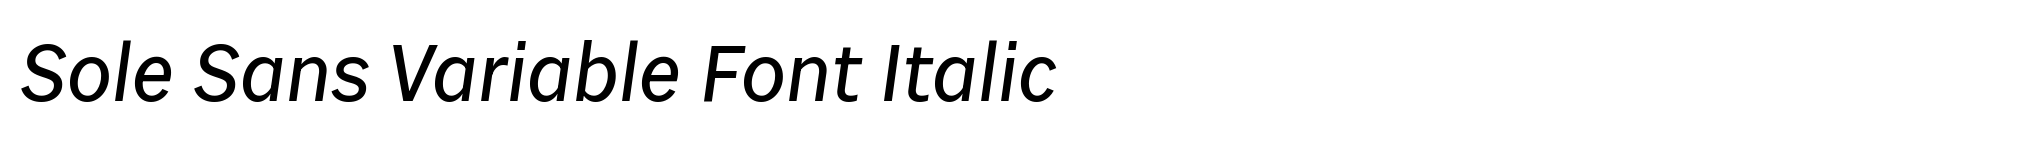 Sole Sans Variable Font Italic image